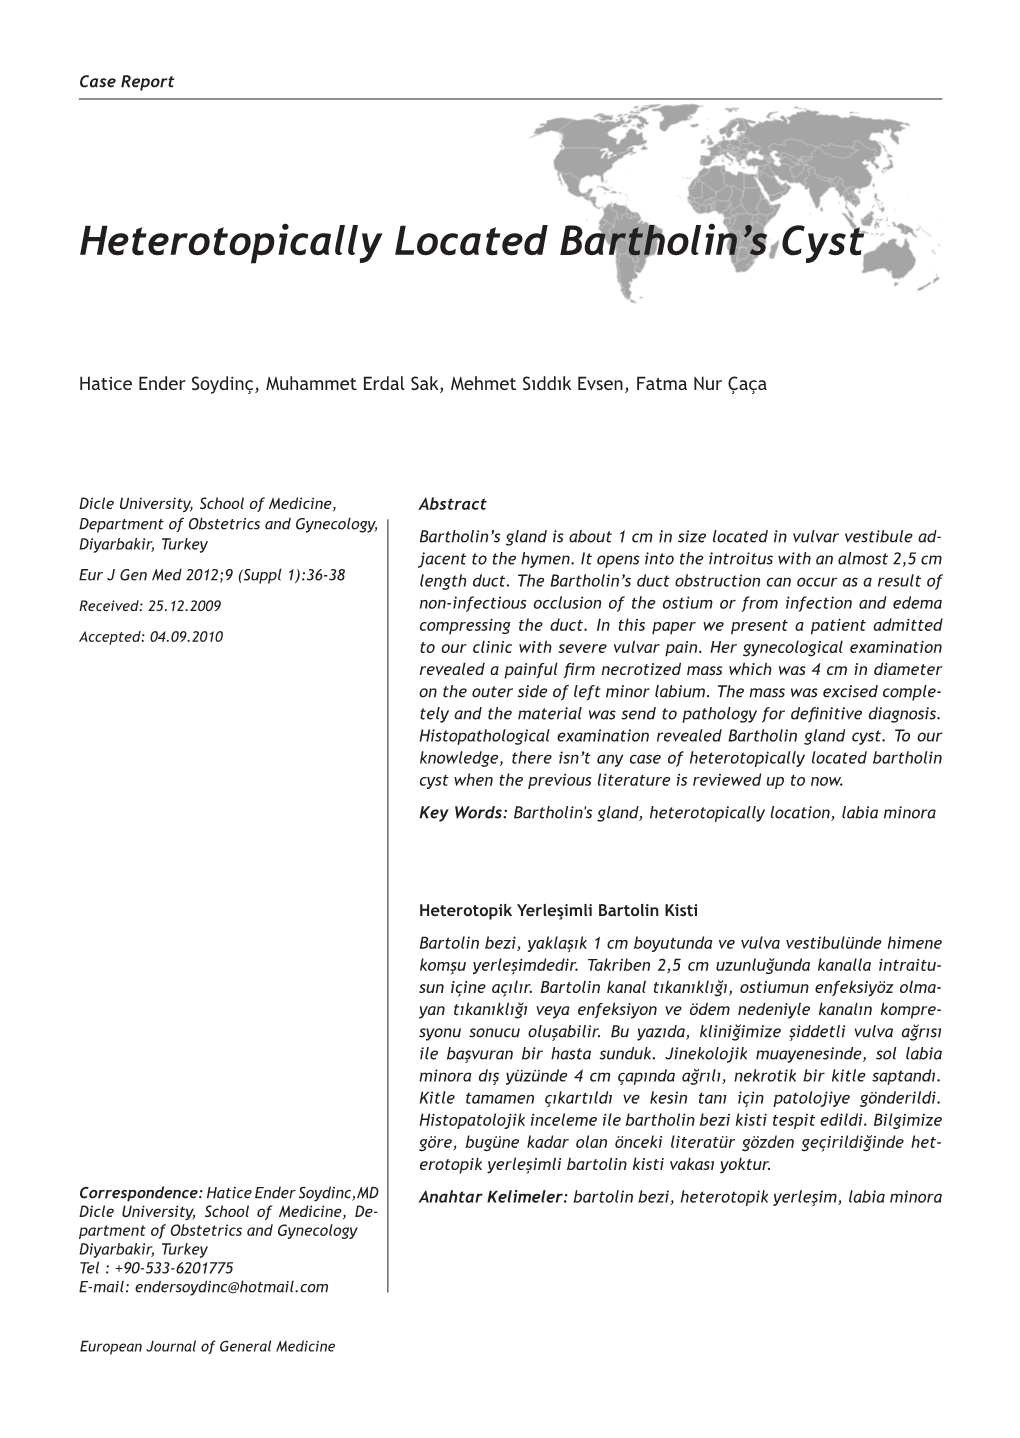 Heterotopically Located Bartholin's Cyst